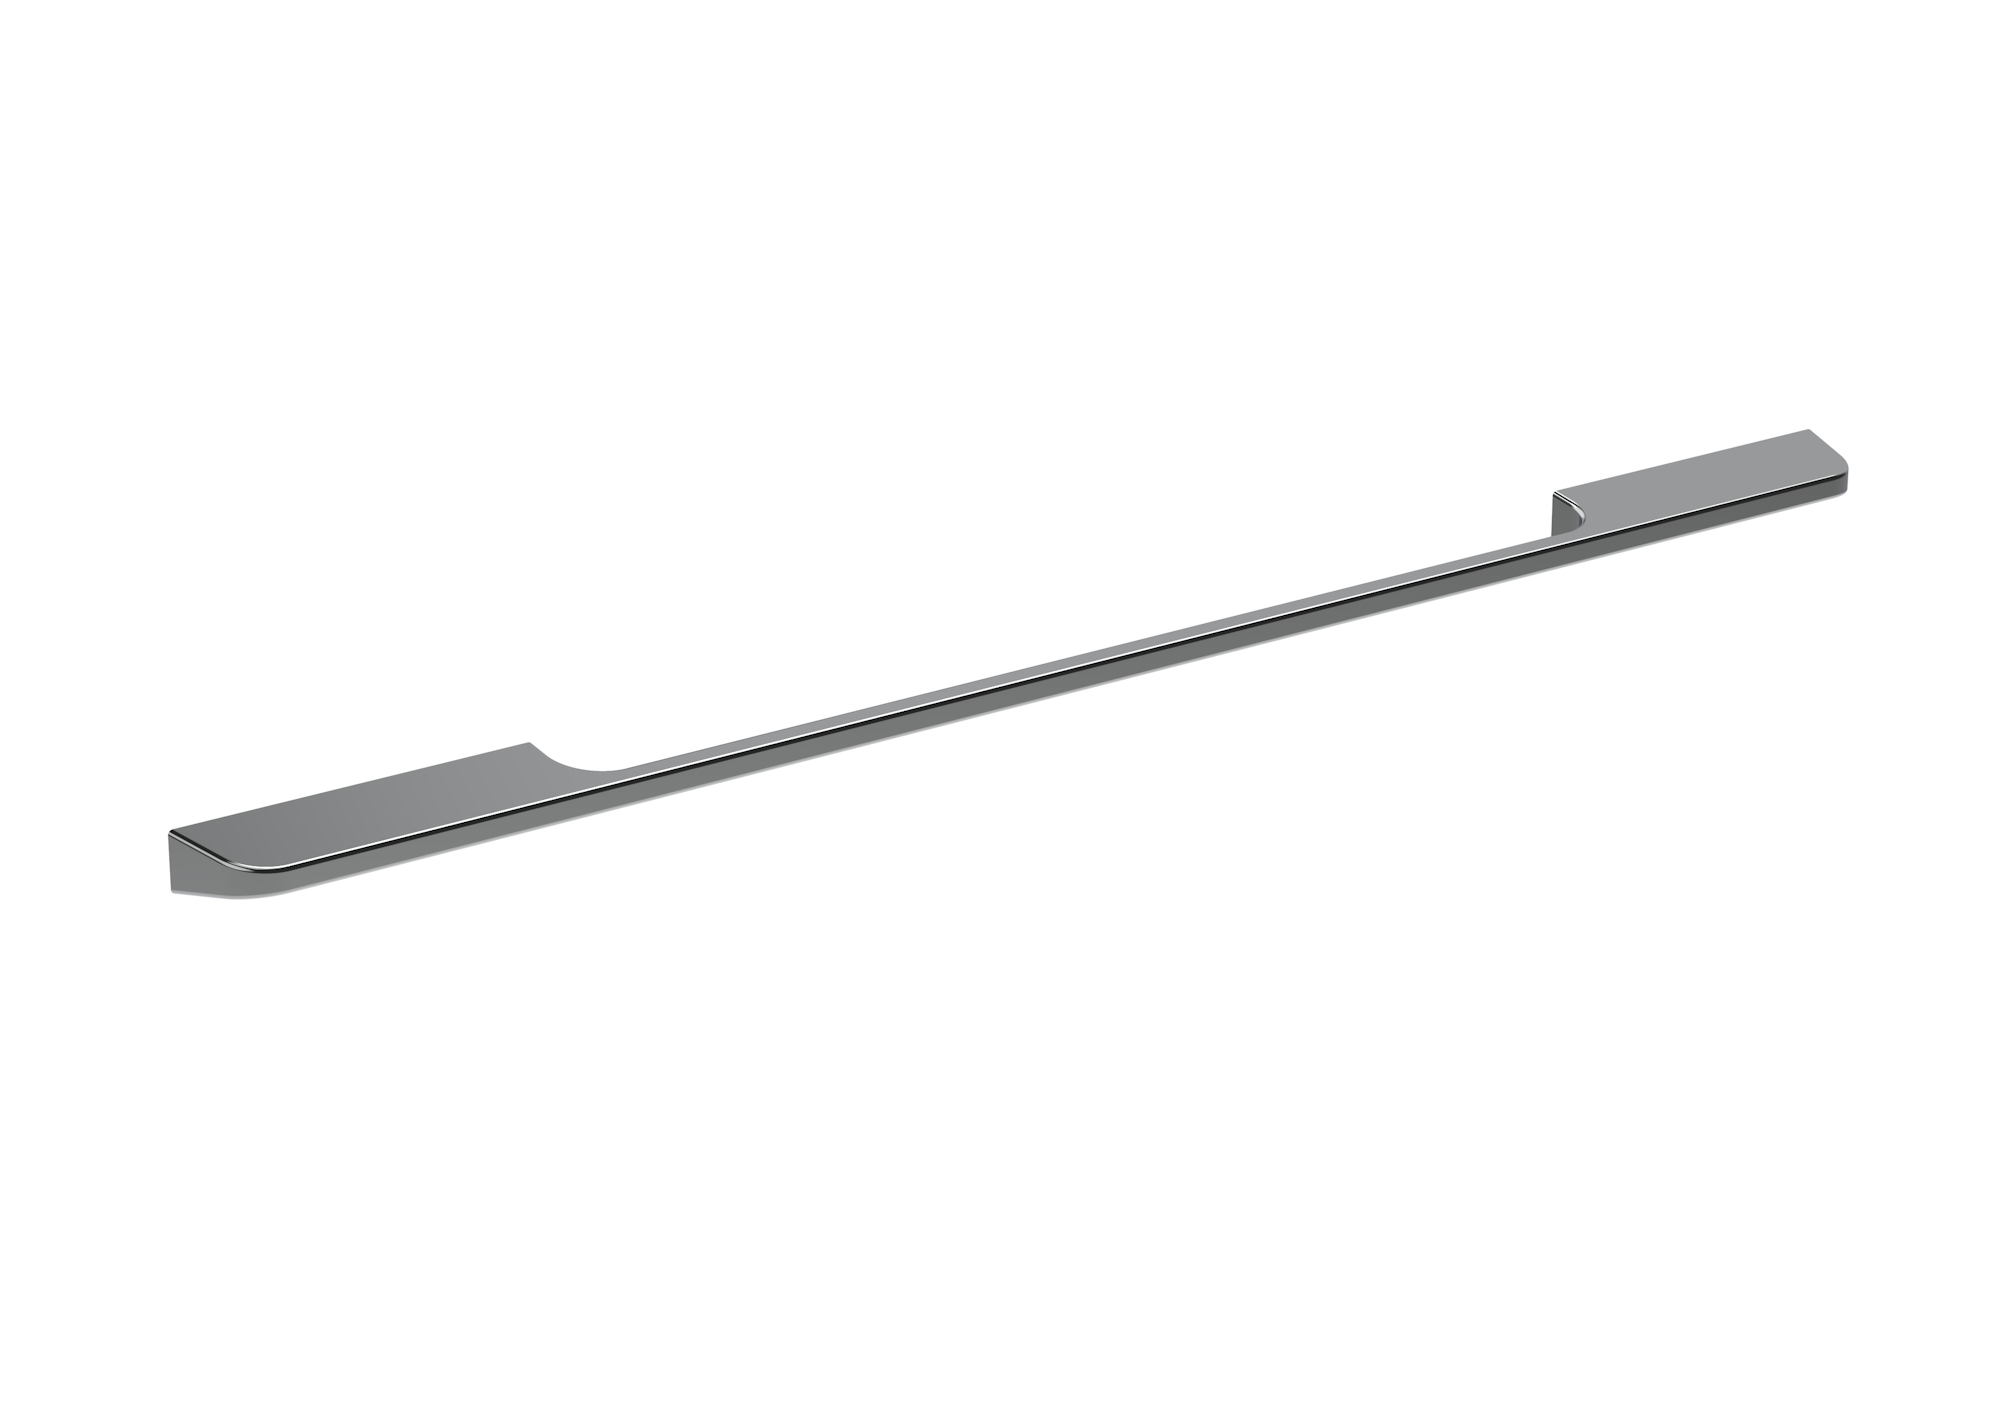 VIENNA 320mm handle - Chrome